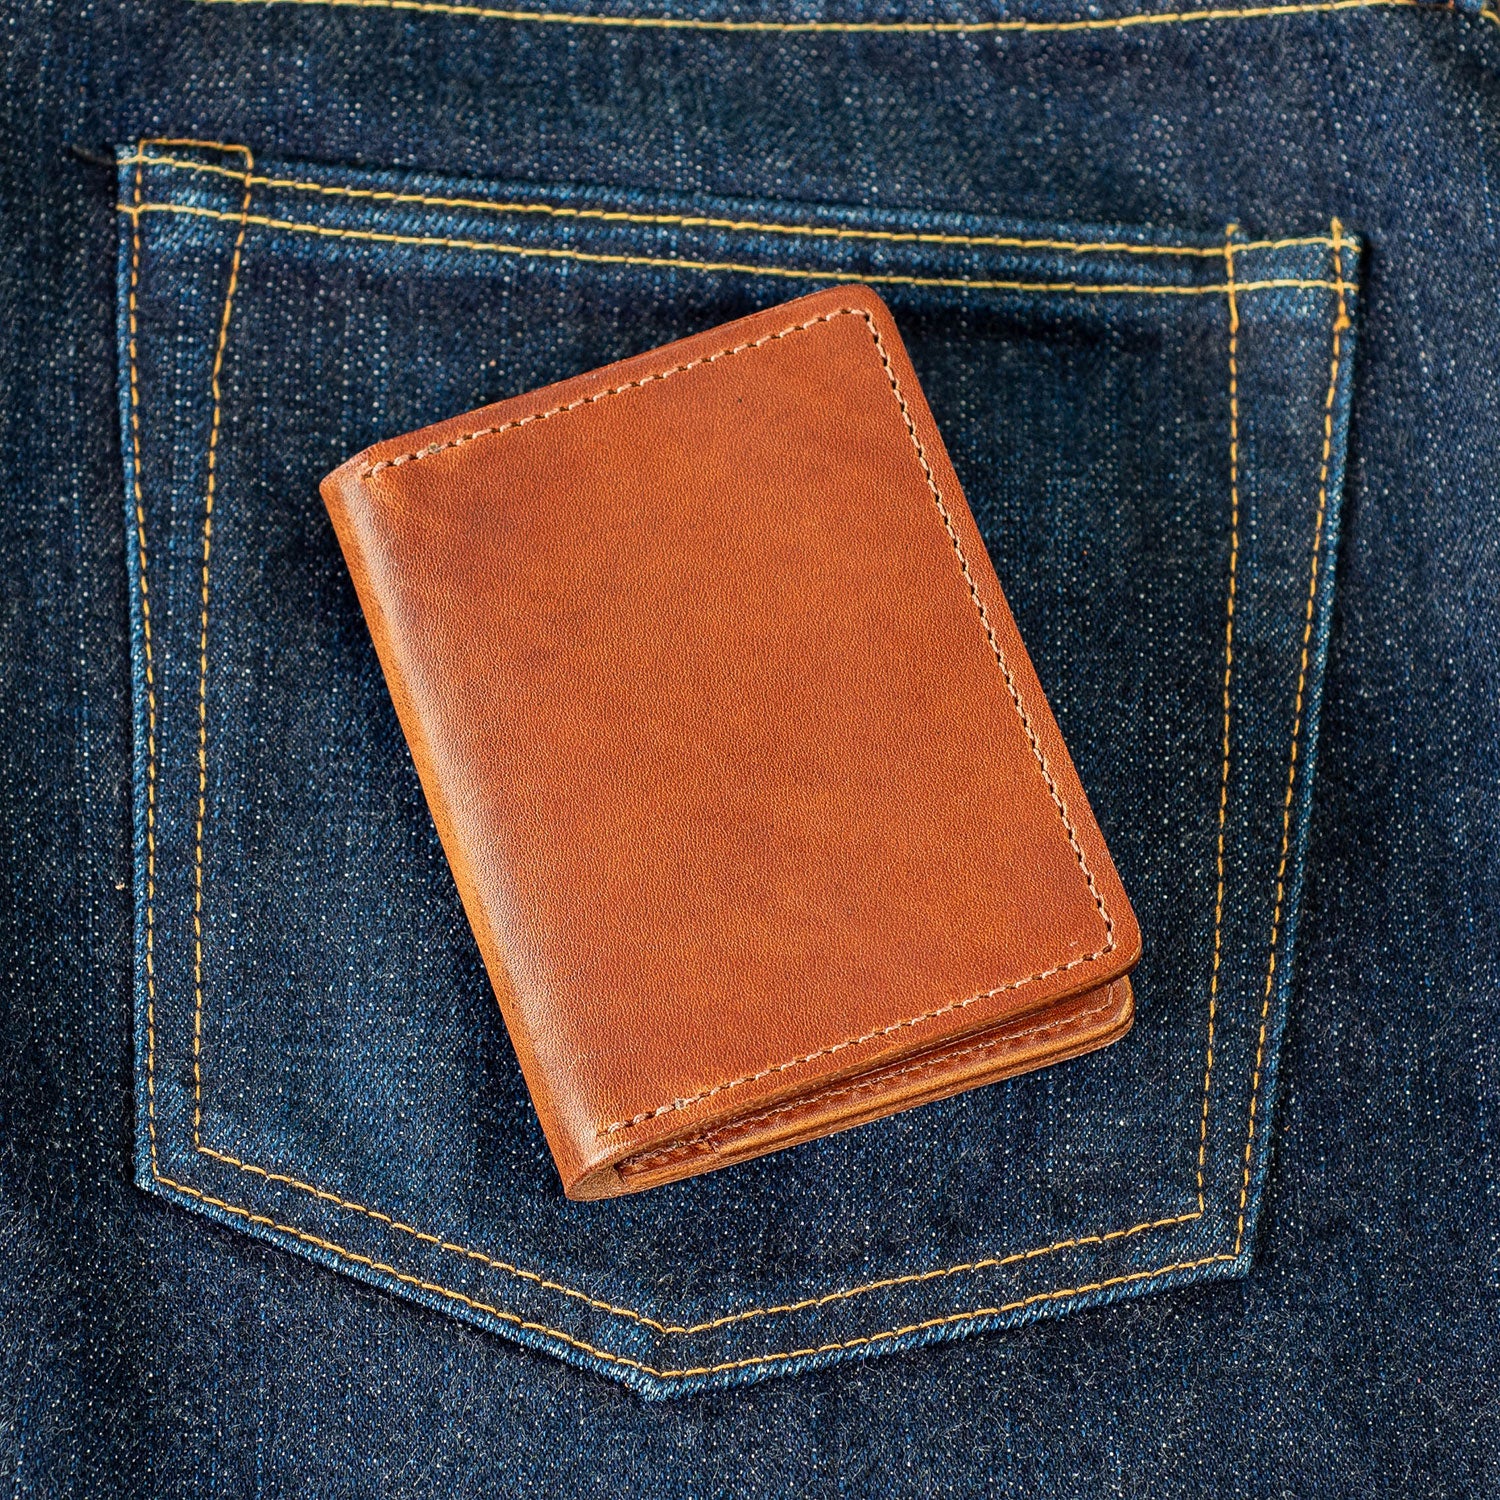 Heritage Brown Leather Card Holder: Slim Fit for Front Pockets